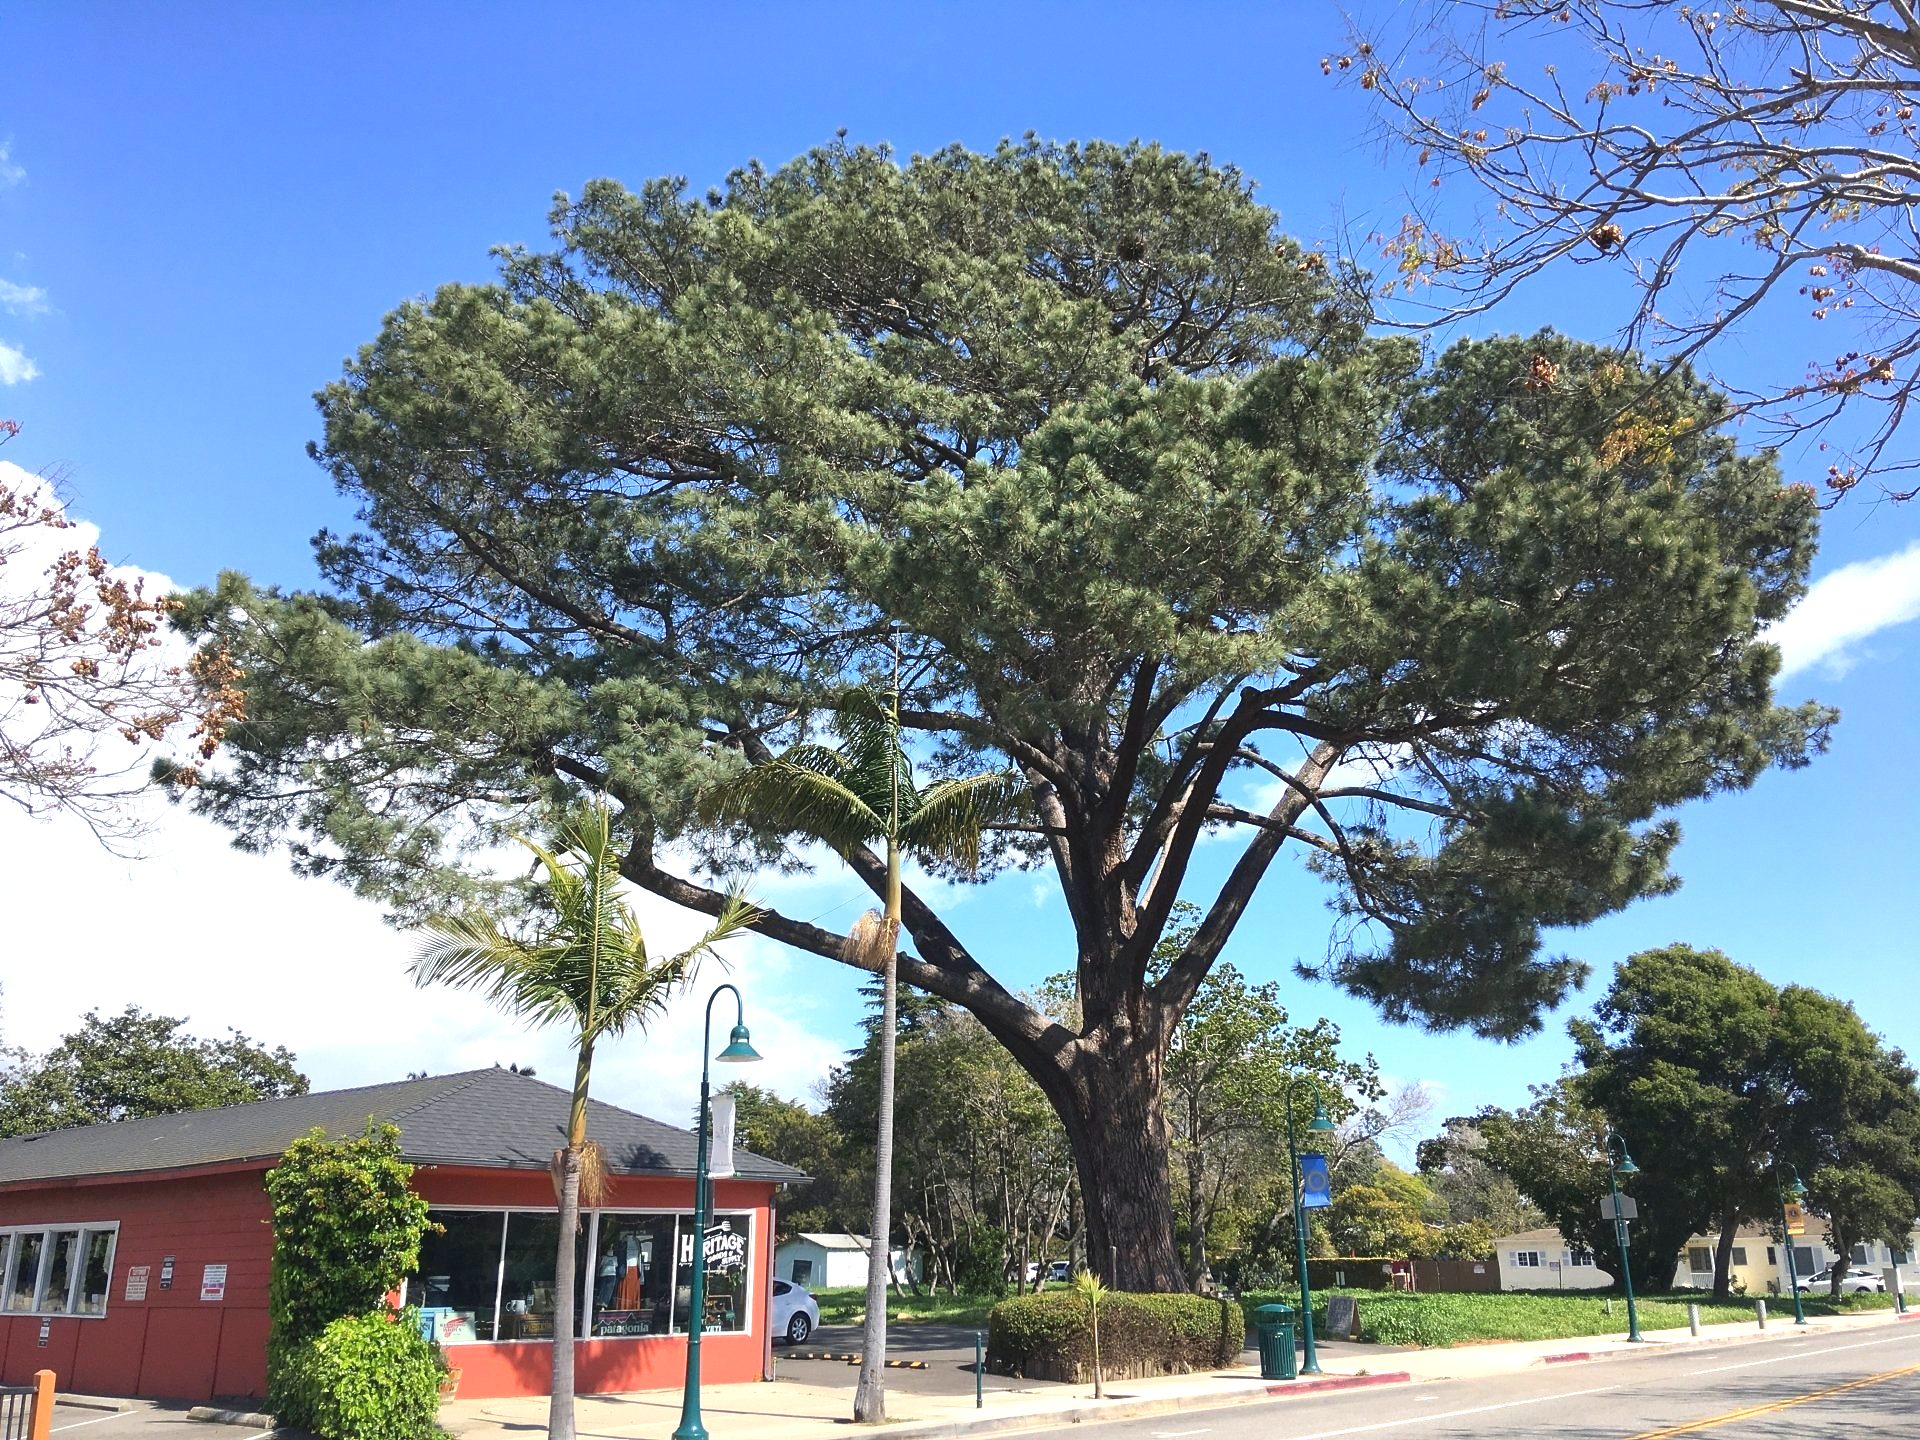 World's Largest Torrey Pine: world record set in Carpinteria, California